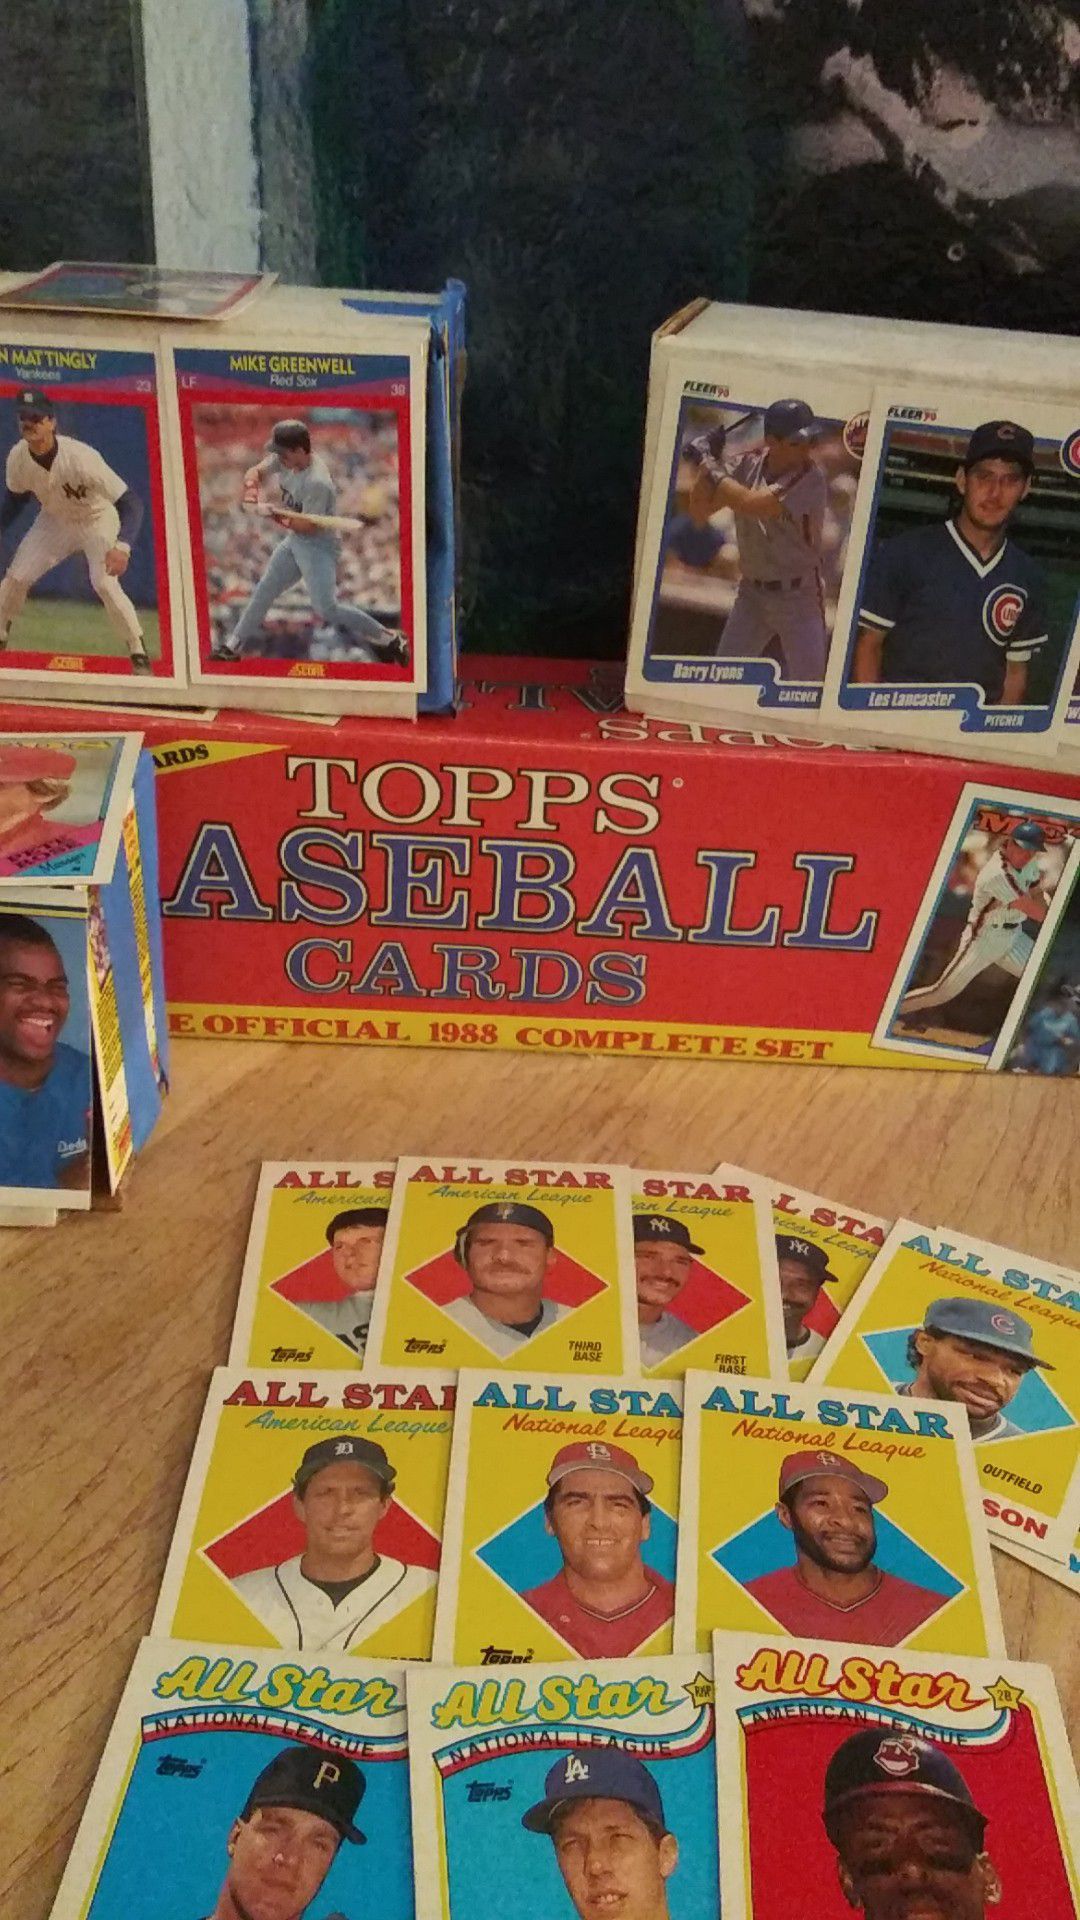 Look 1990 baseball cards